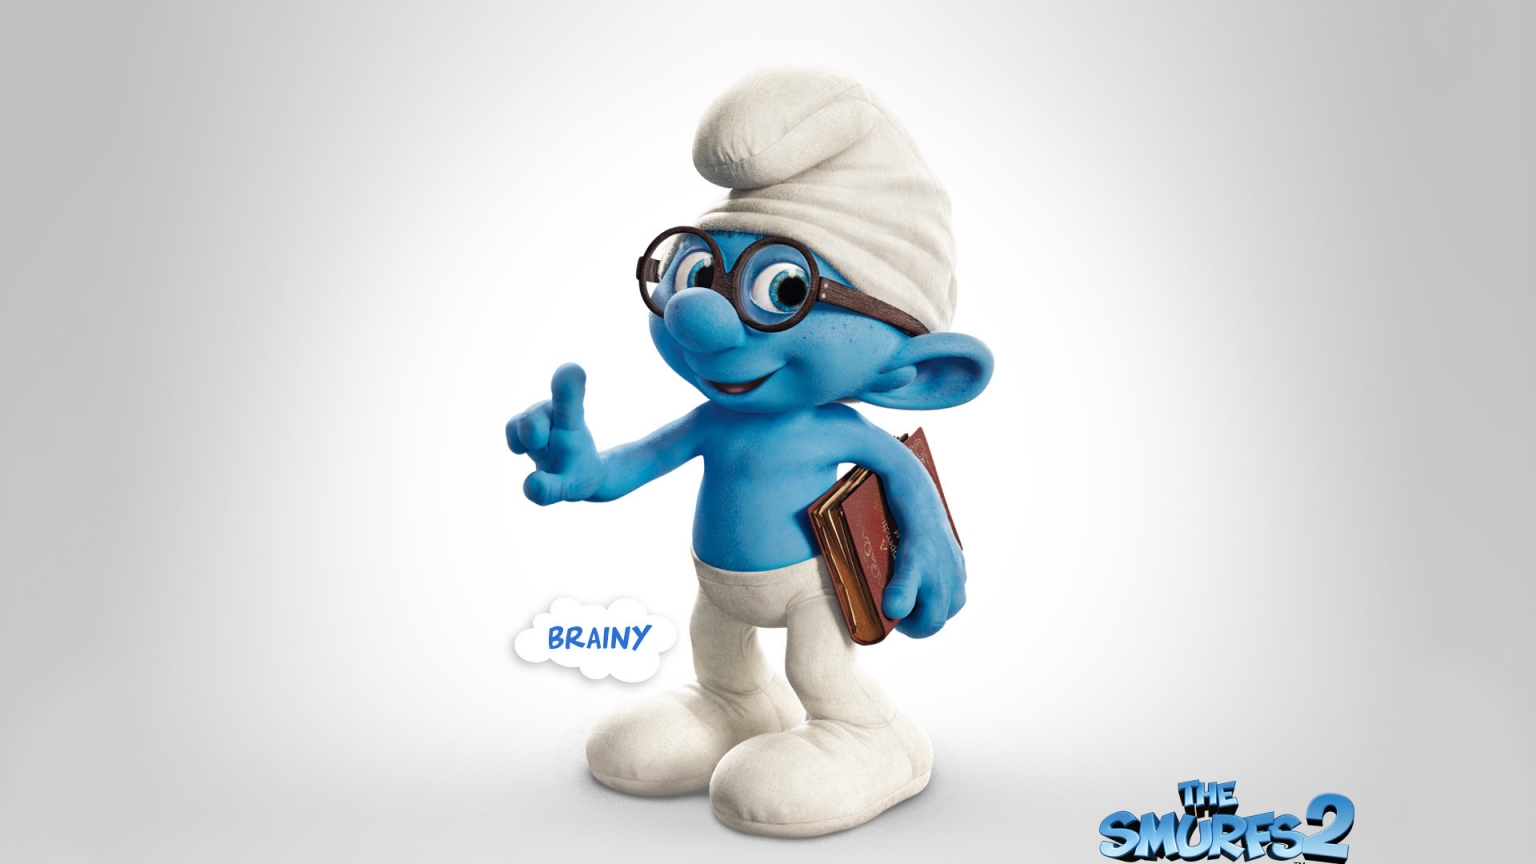 Brainy The Smurfs 2 for 1536 x 864 HDTV resolution